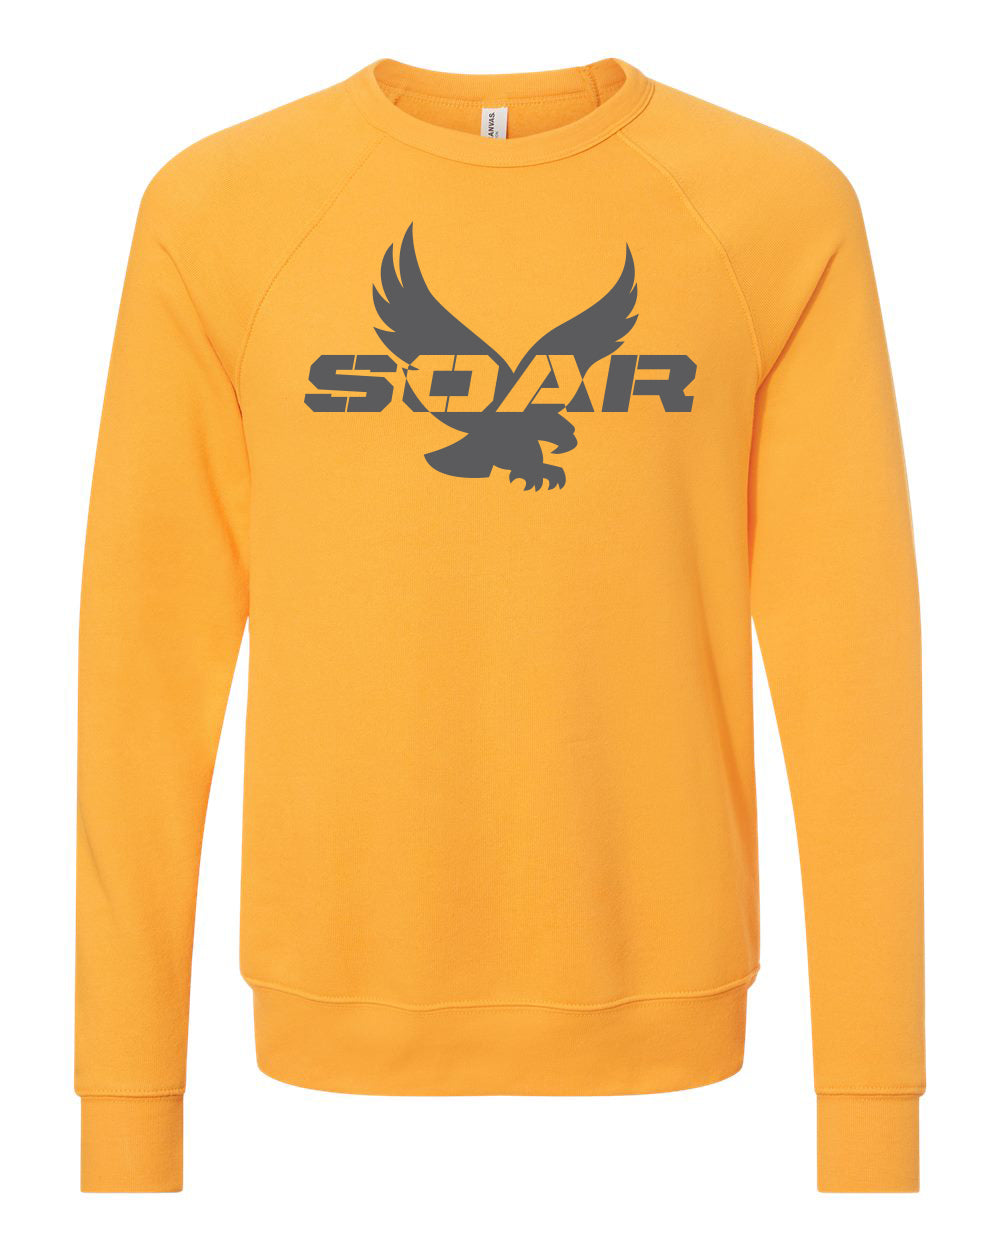 3901 - SOAR SPIRIT - Adult BELLA CANVAS Raglan Crewneck Sweatshirt